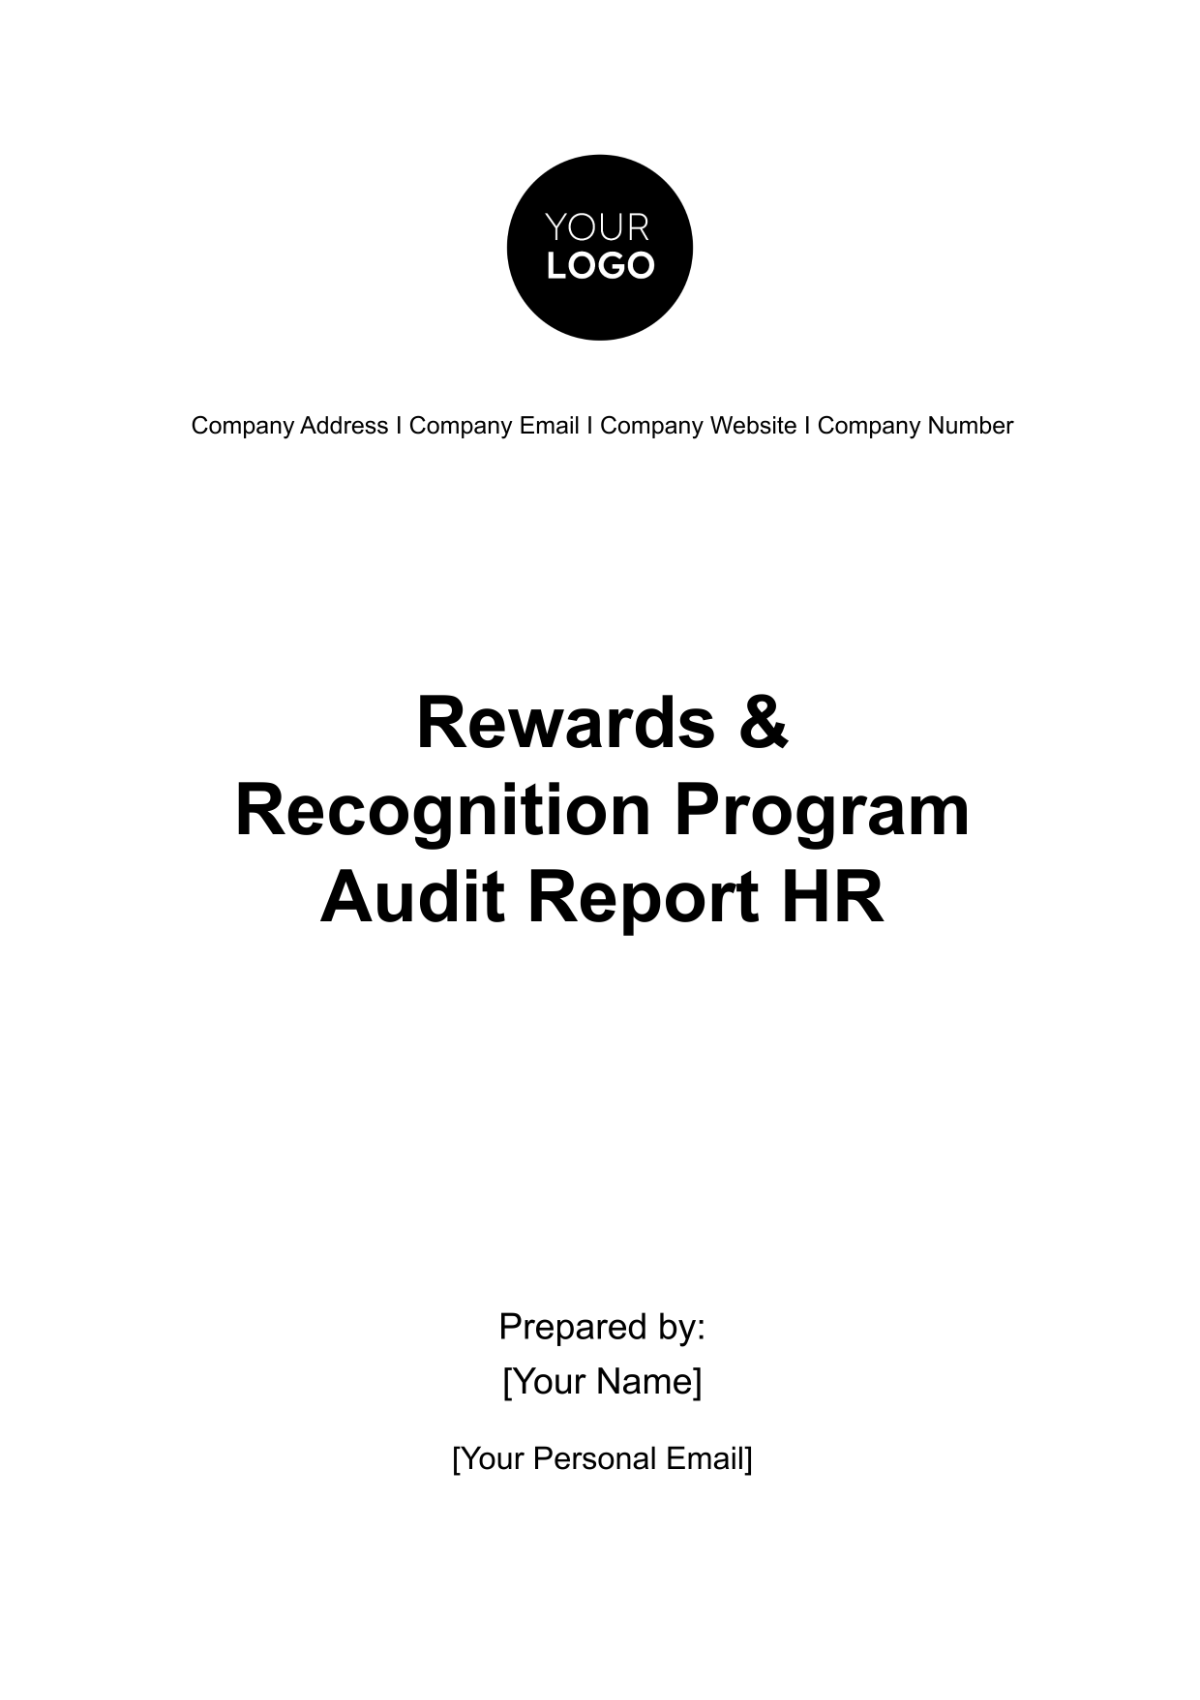 Rewards & Recognition Program Audit Report HR Template